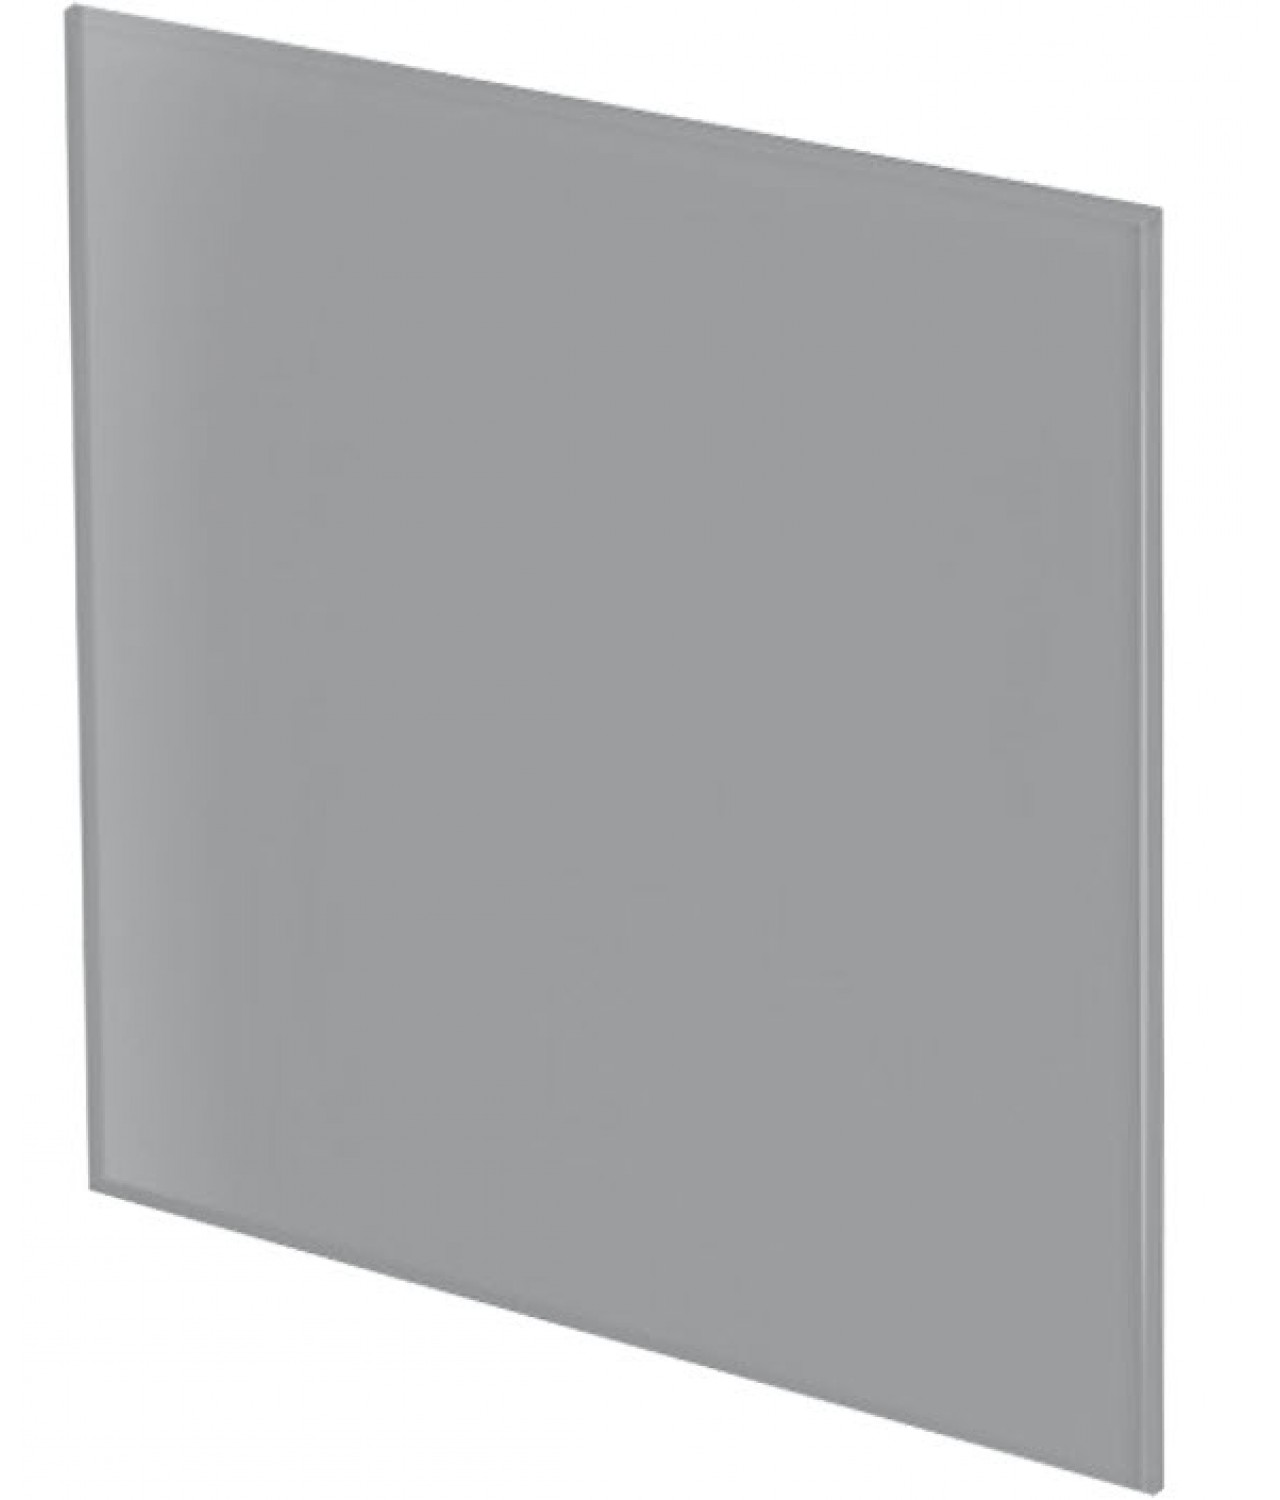 Interjerinis dangtelis PTGG125M - TRAX GLASS grey matte